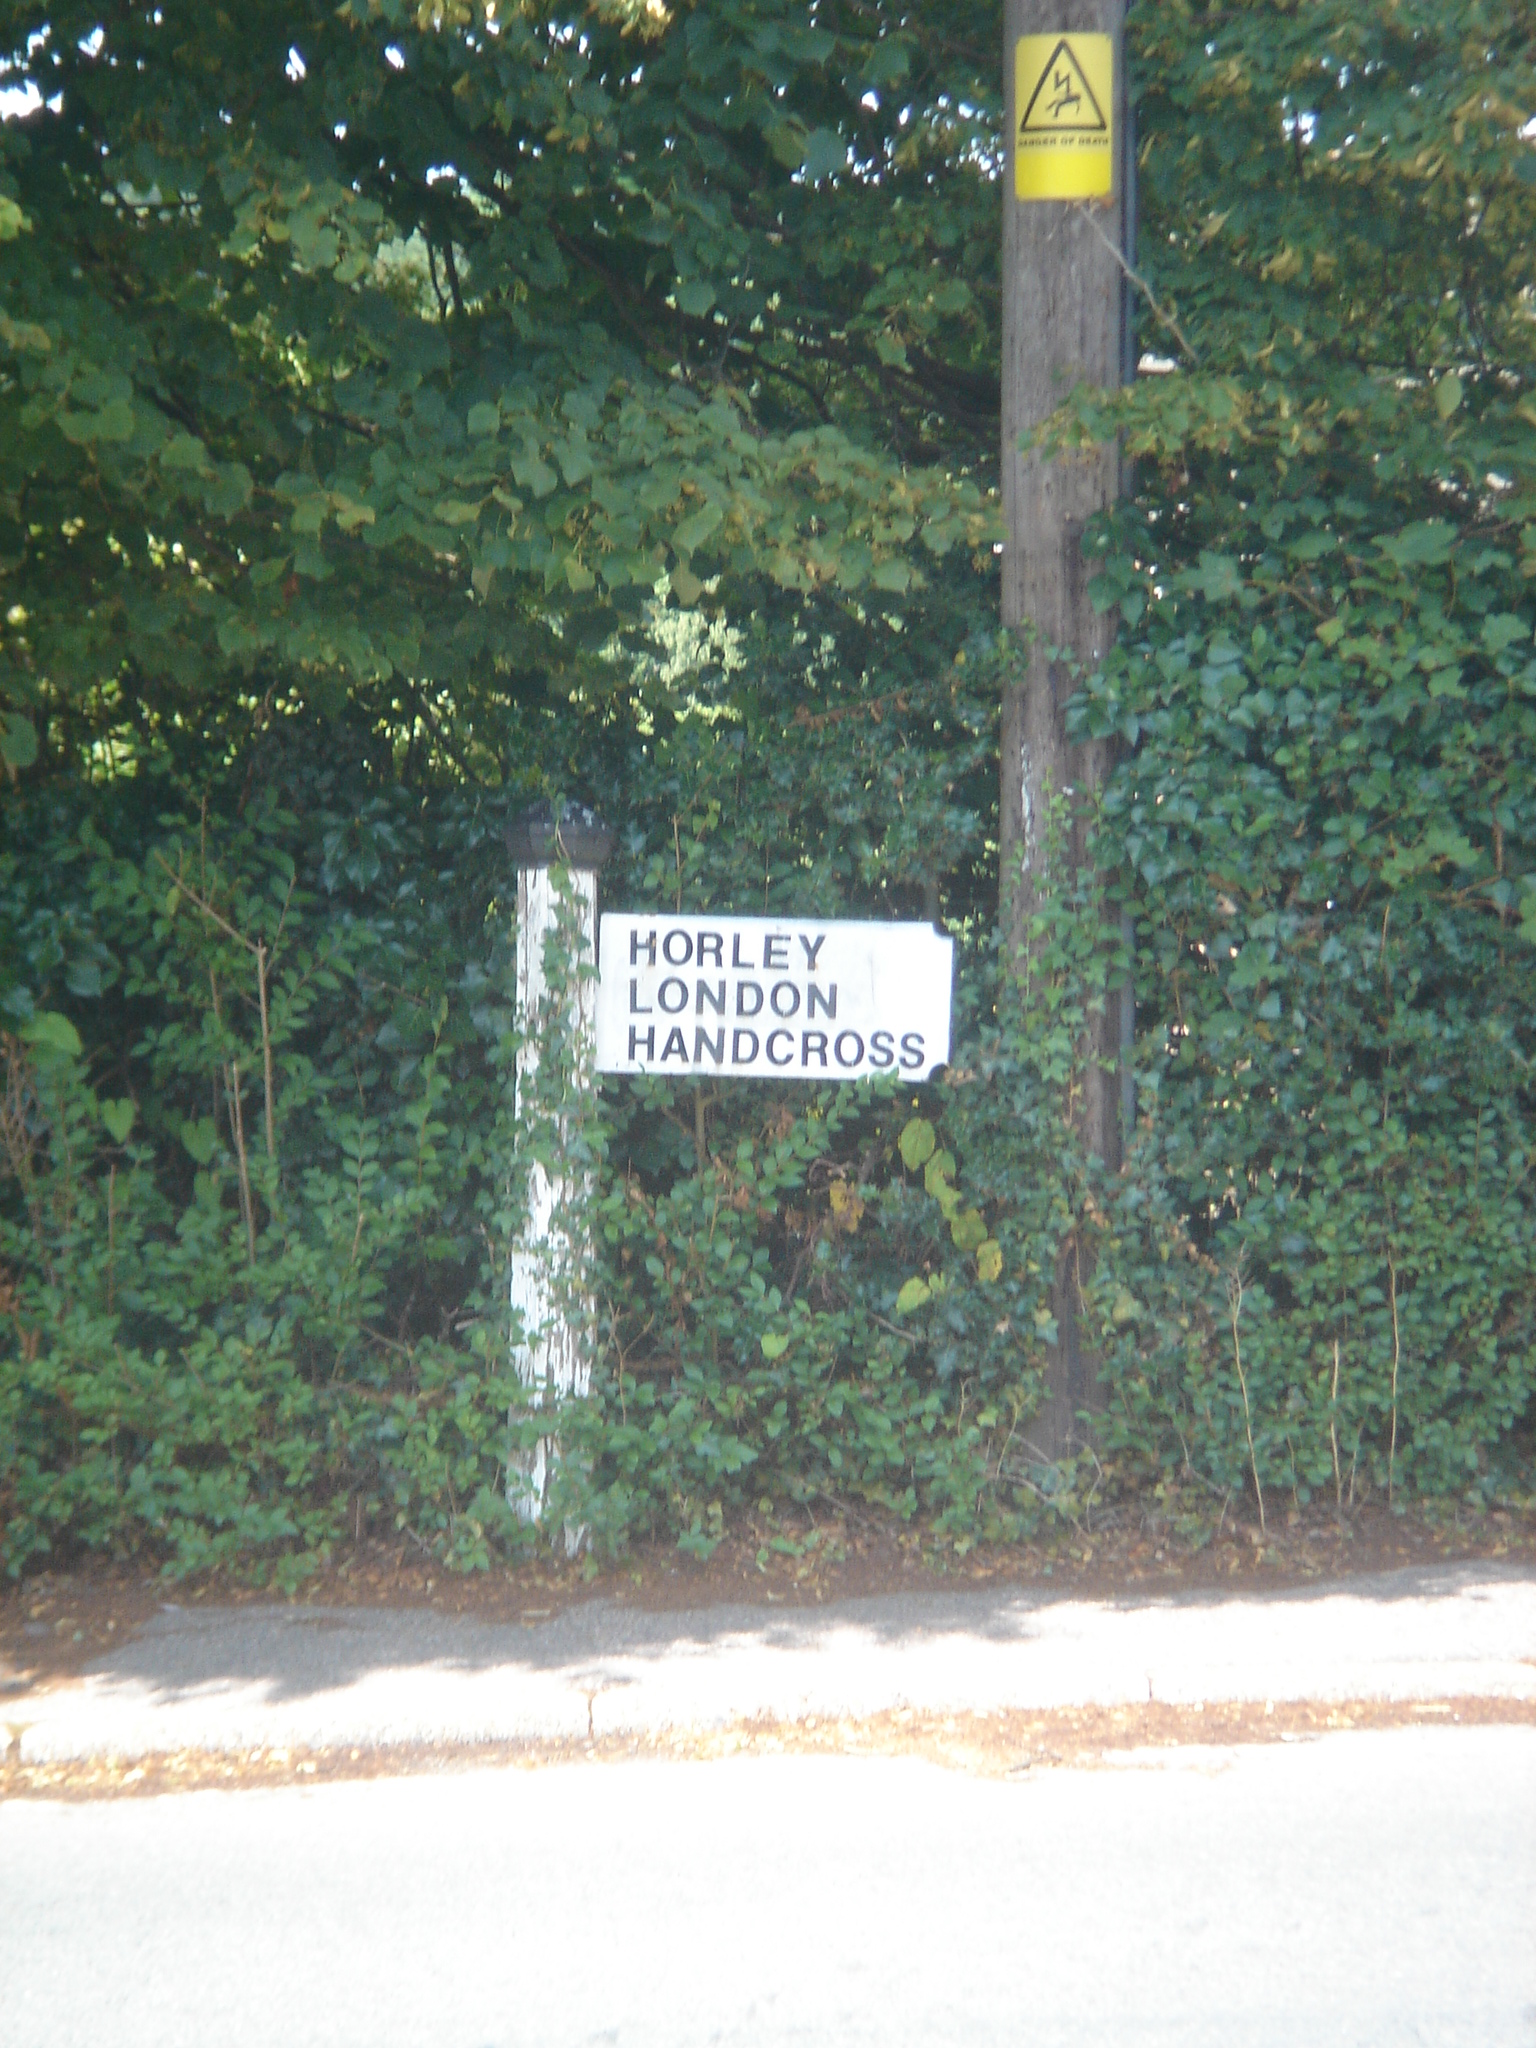 a street sign on a pole near some trees